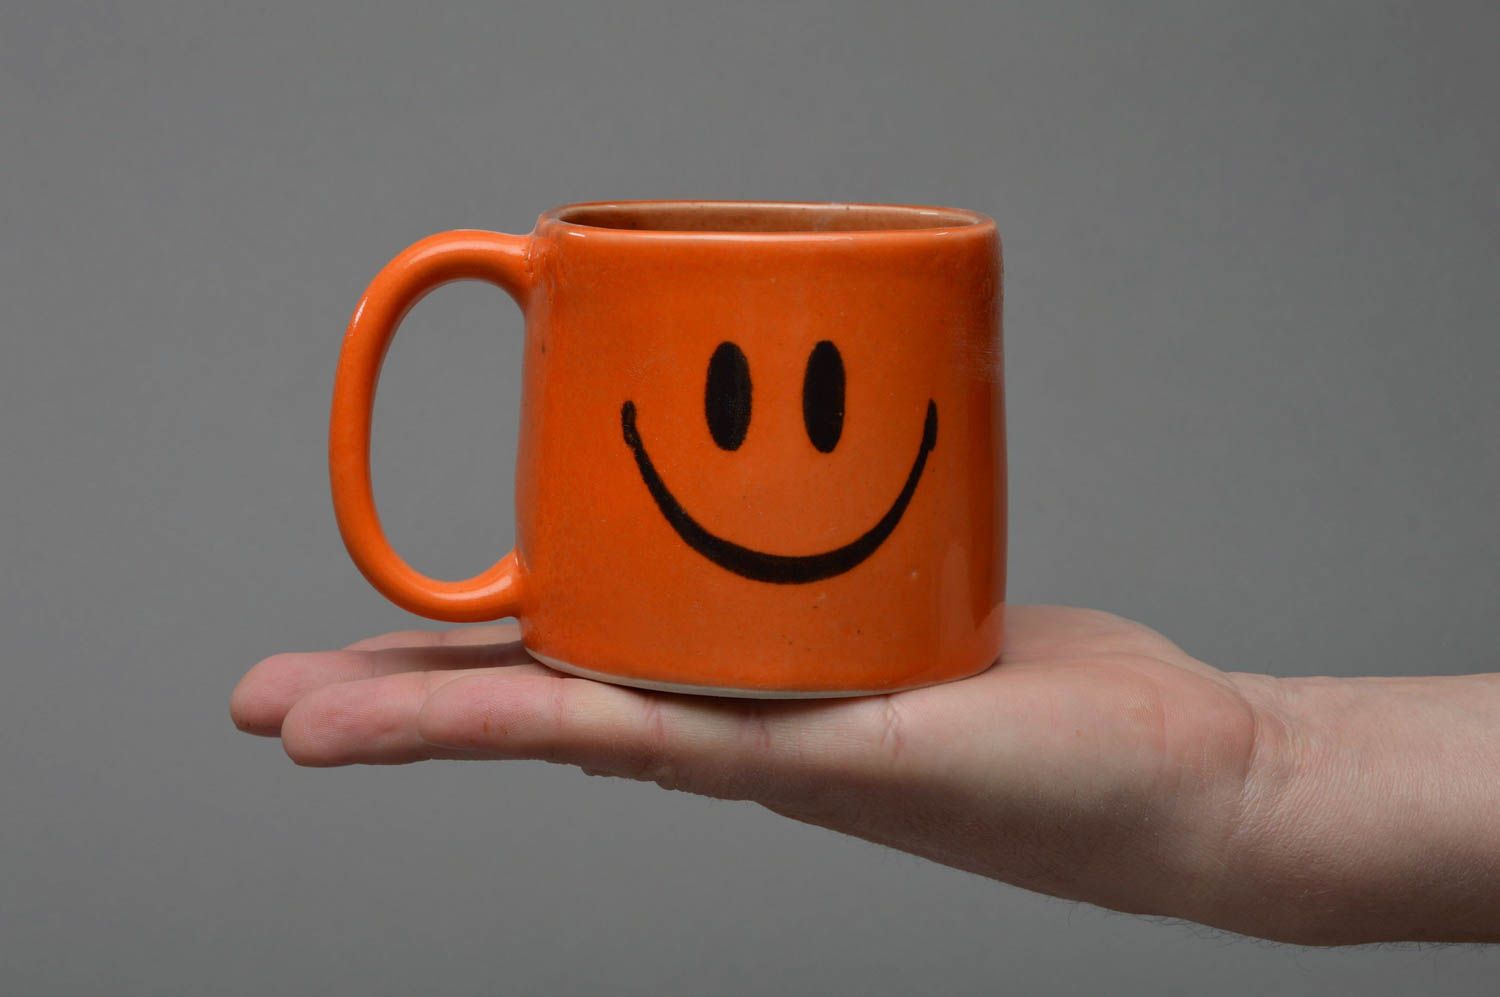 Tasse en porcelaine faite main orange avec smiley et inscription For Joy photo 4